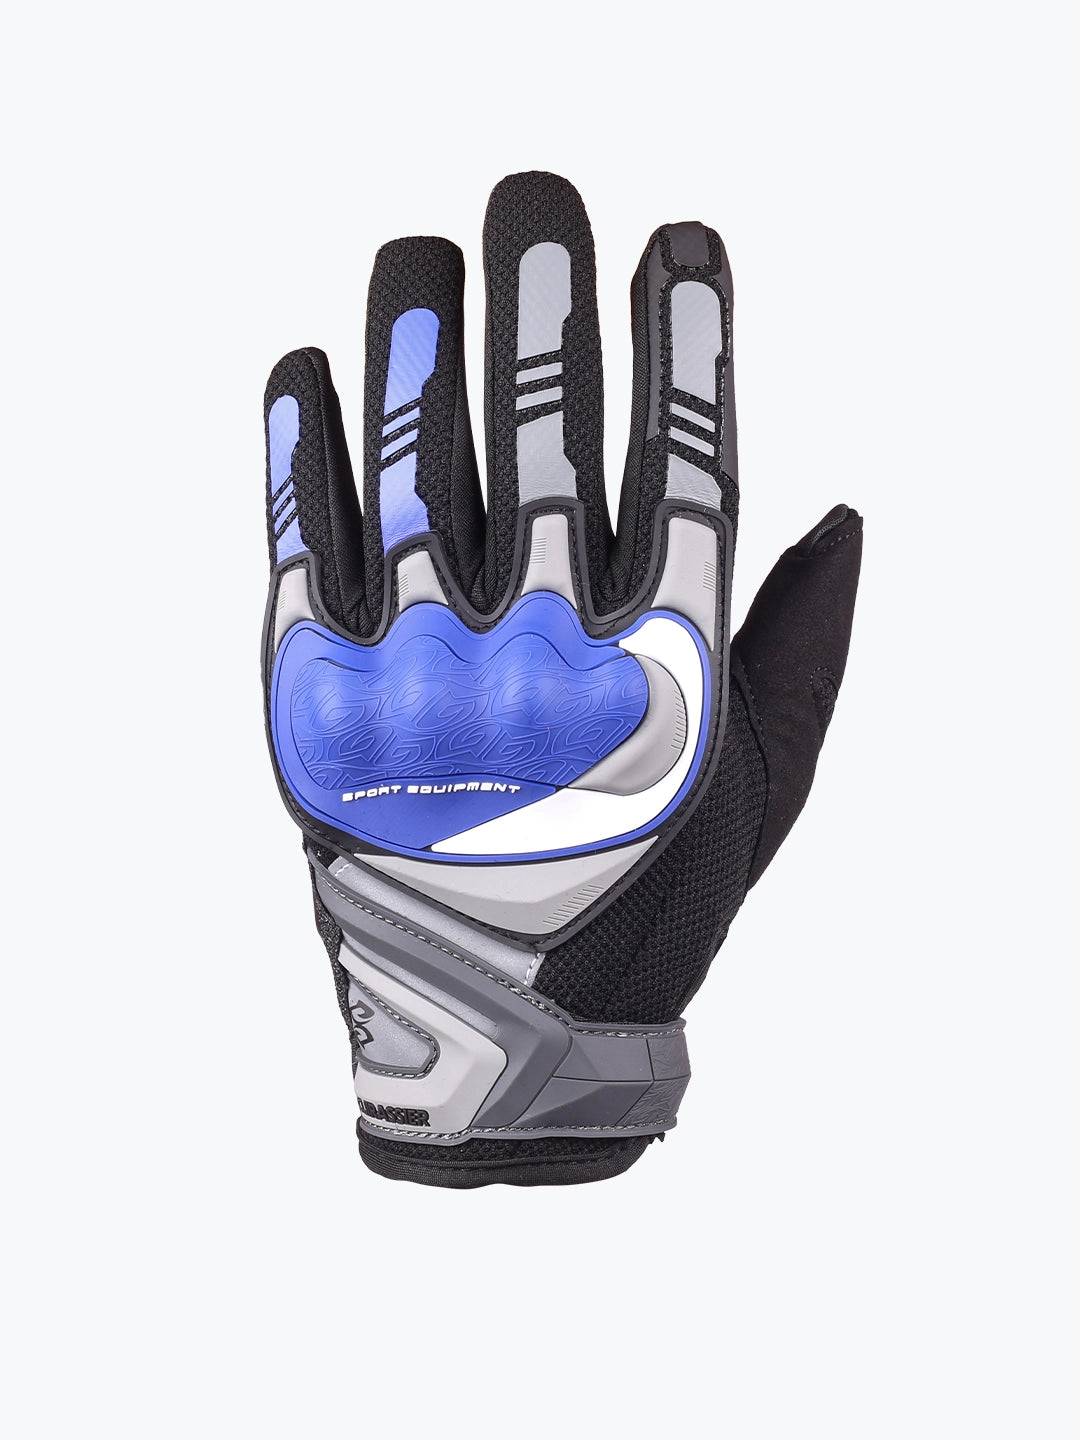 Cuirassier Gloves Blue Grey